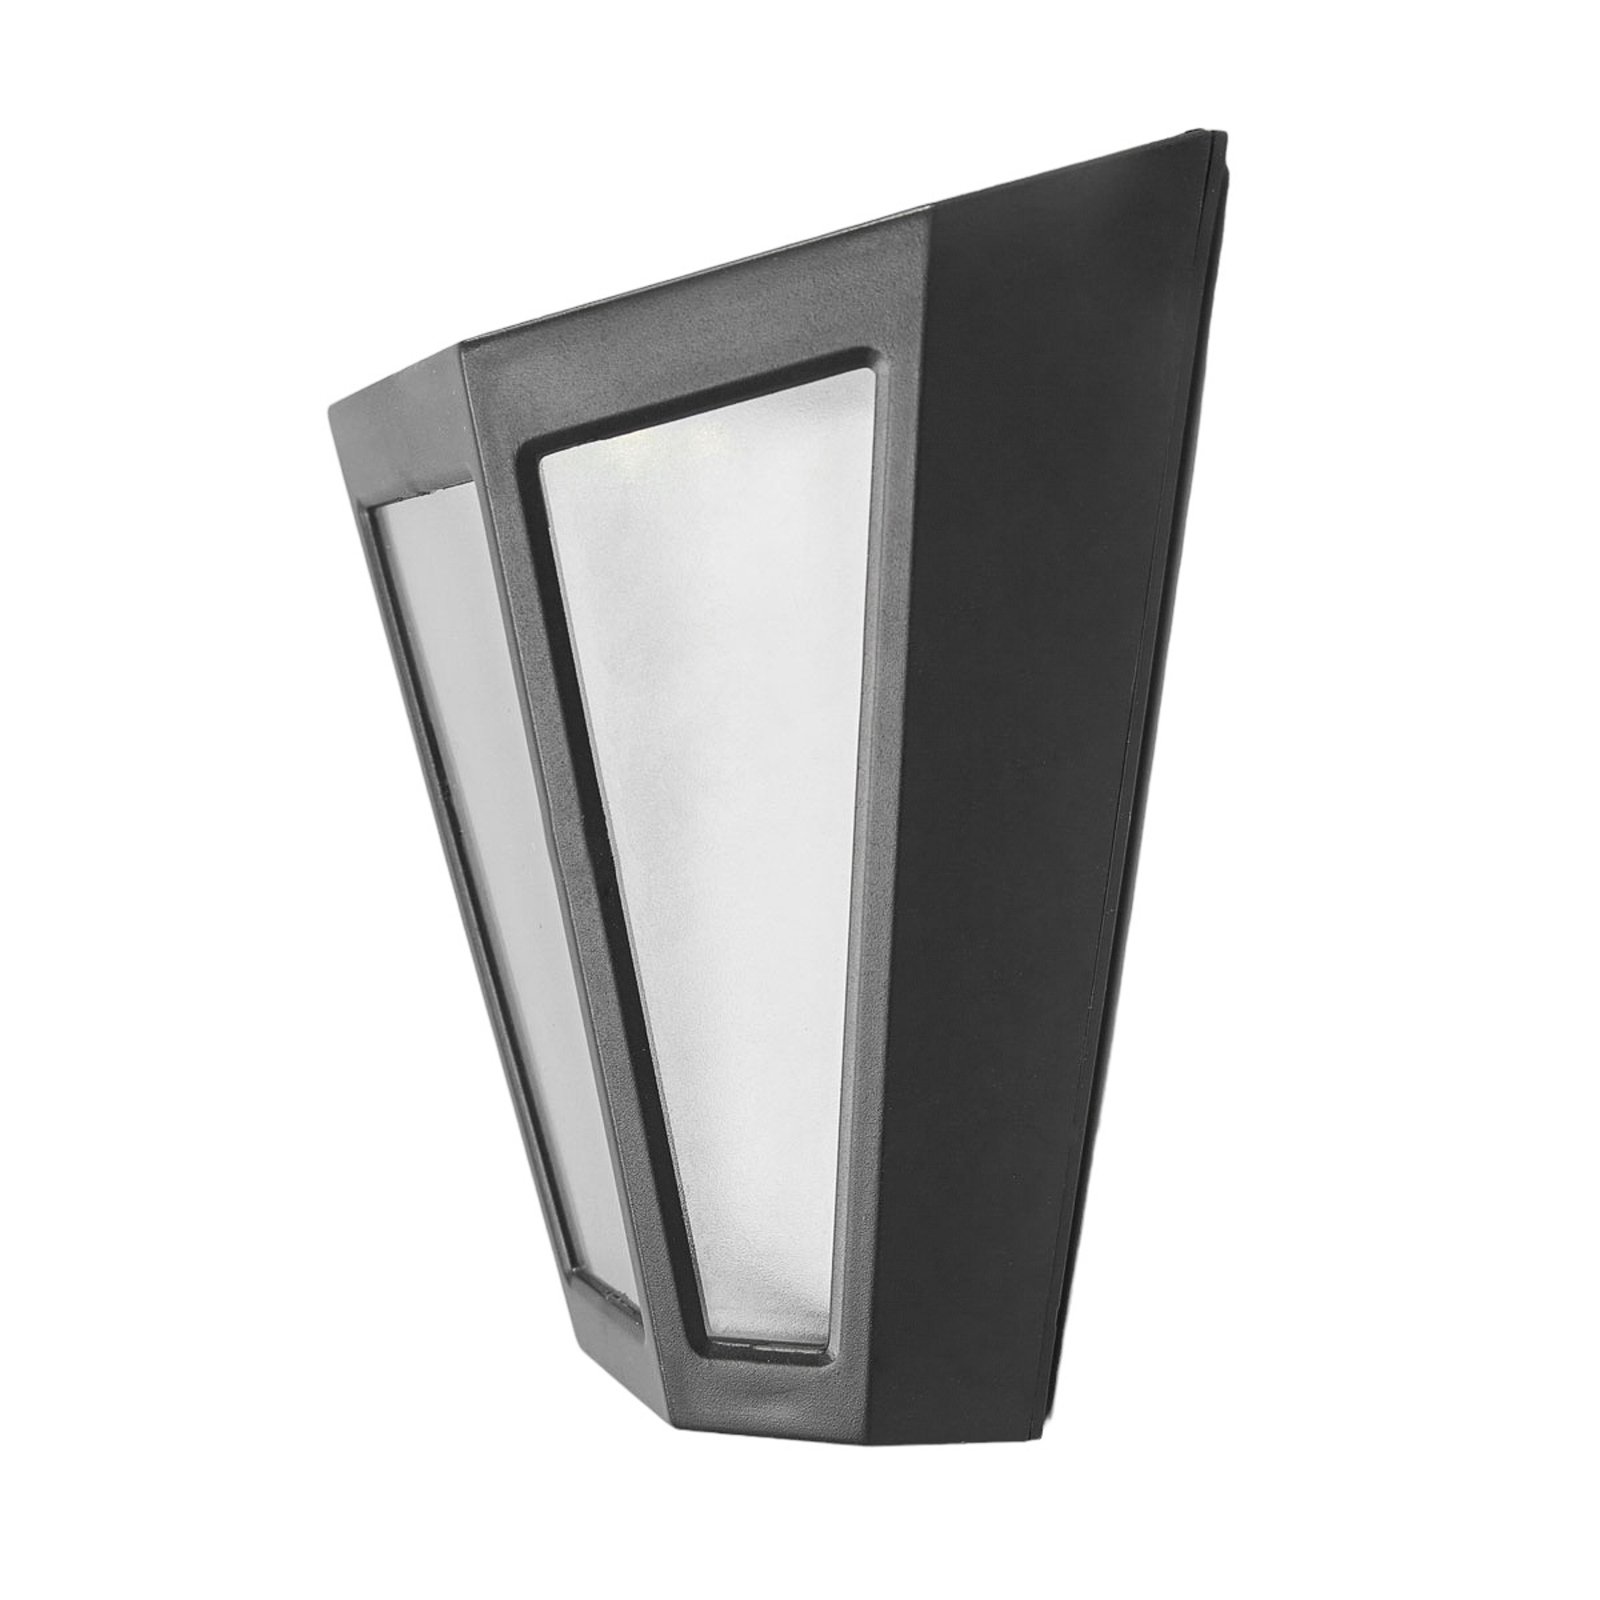 LED-solarlampa Yago, frostad skärm